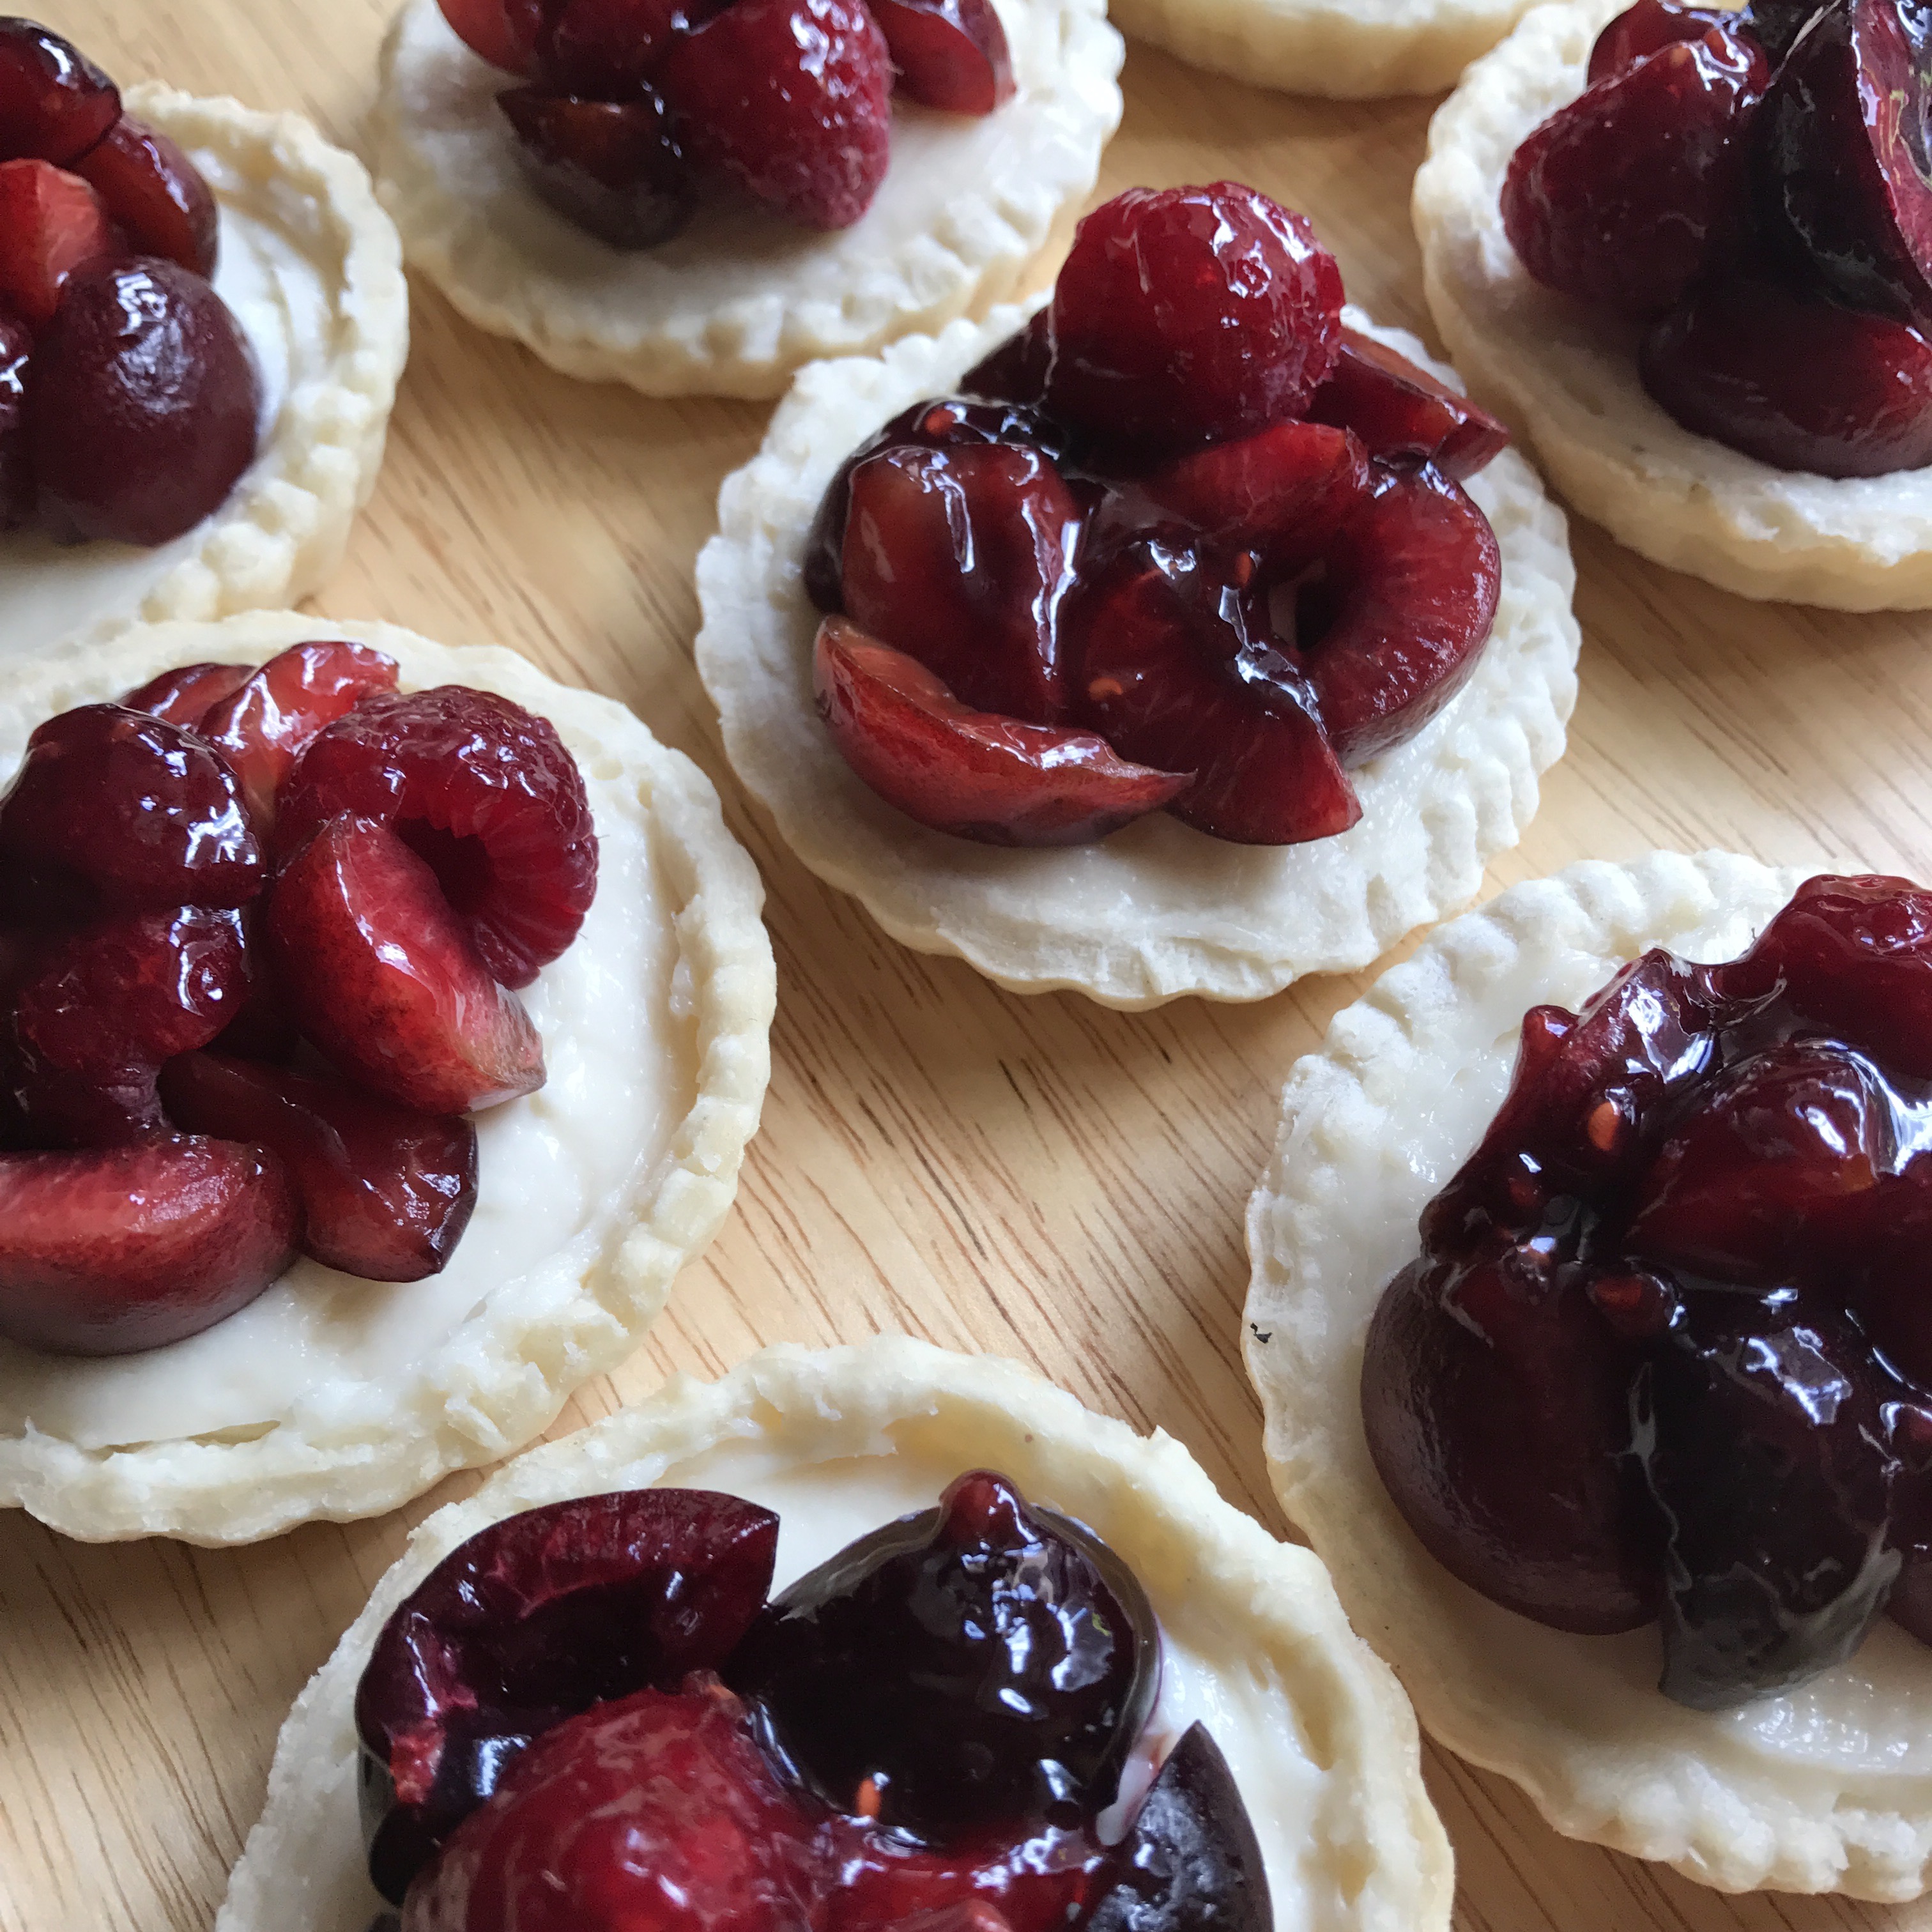 Miniature tarts with raspberries and cherries